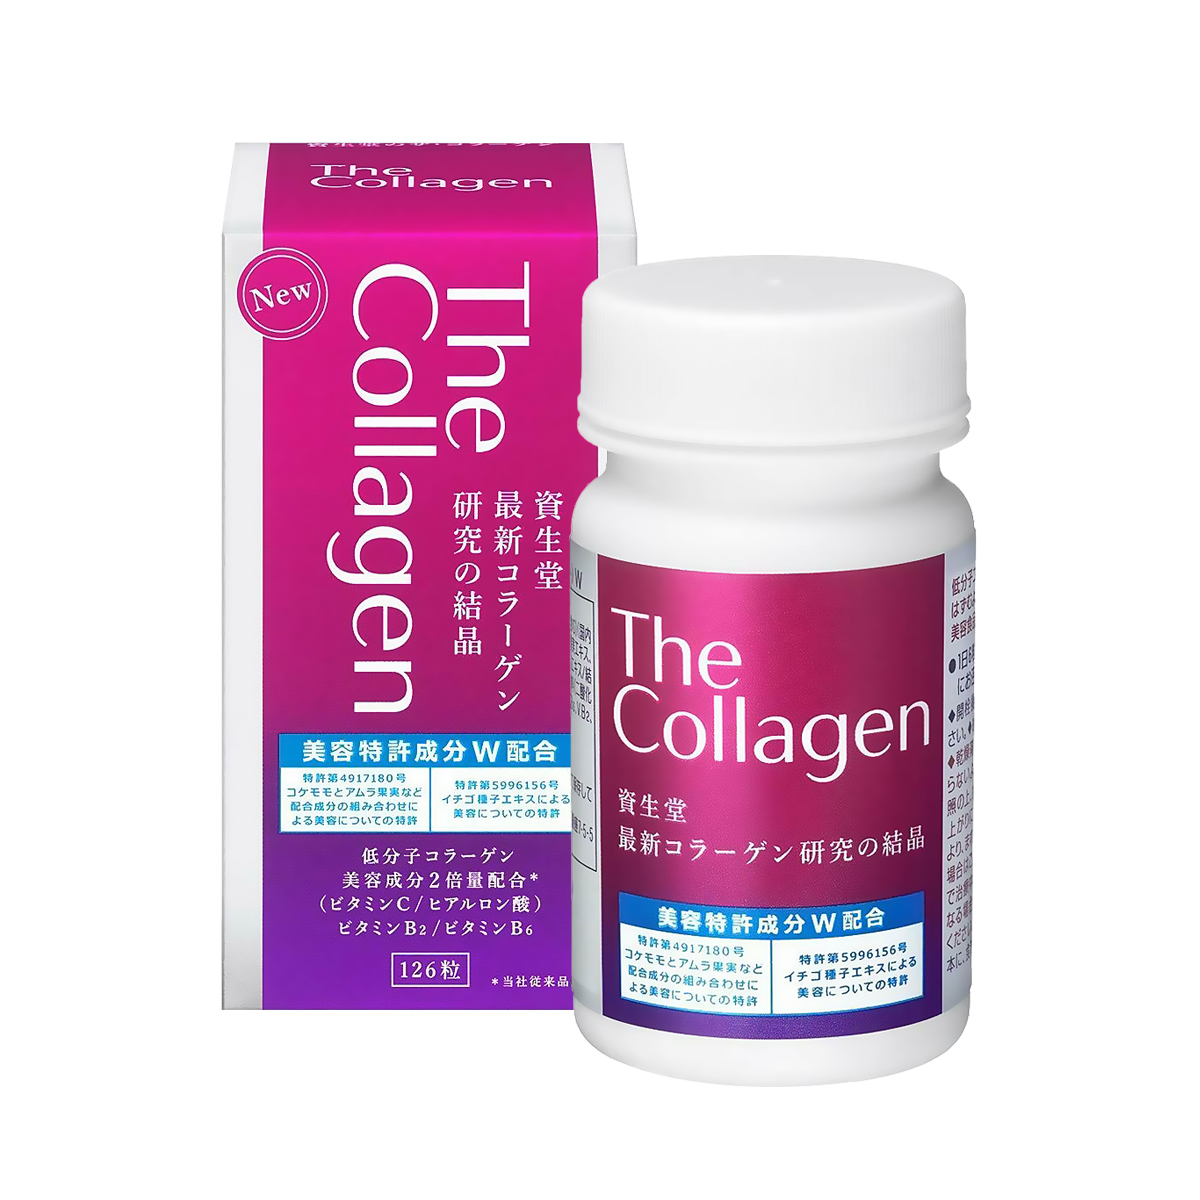 Vien - uong - collagen Shiseido The Collagen